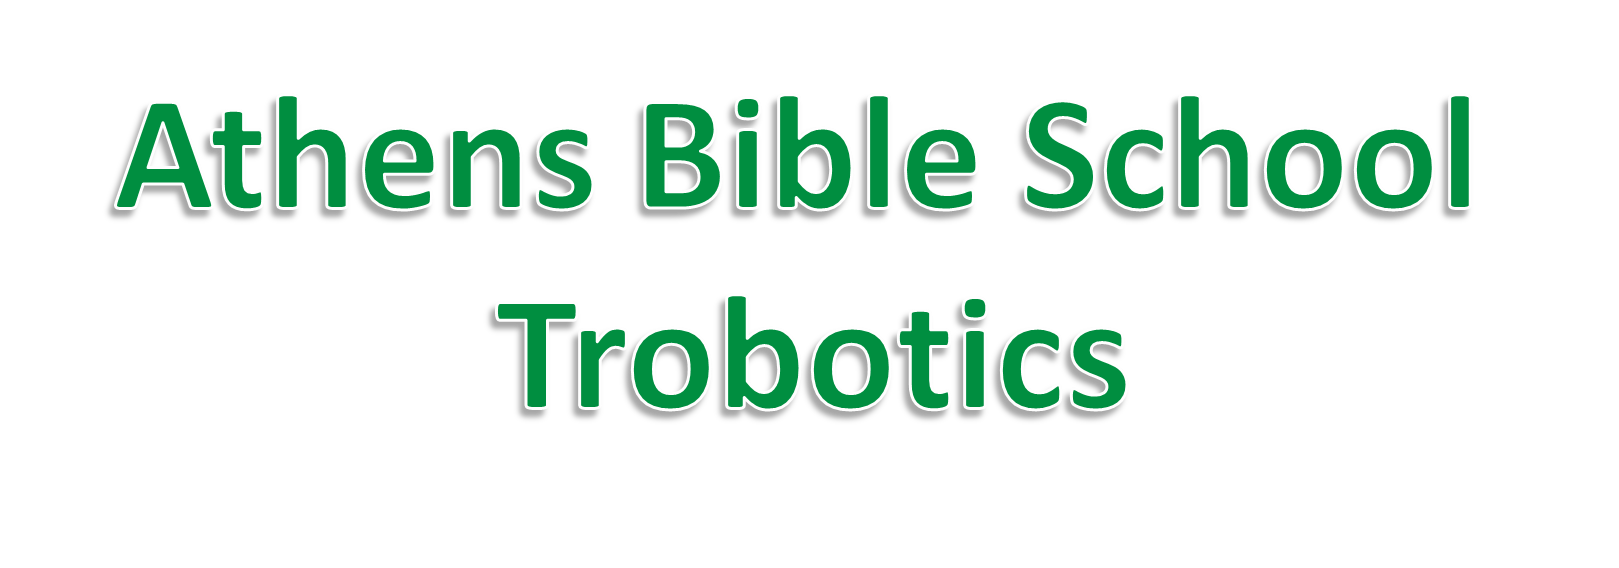 Athens Bible School Trobotics